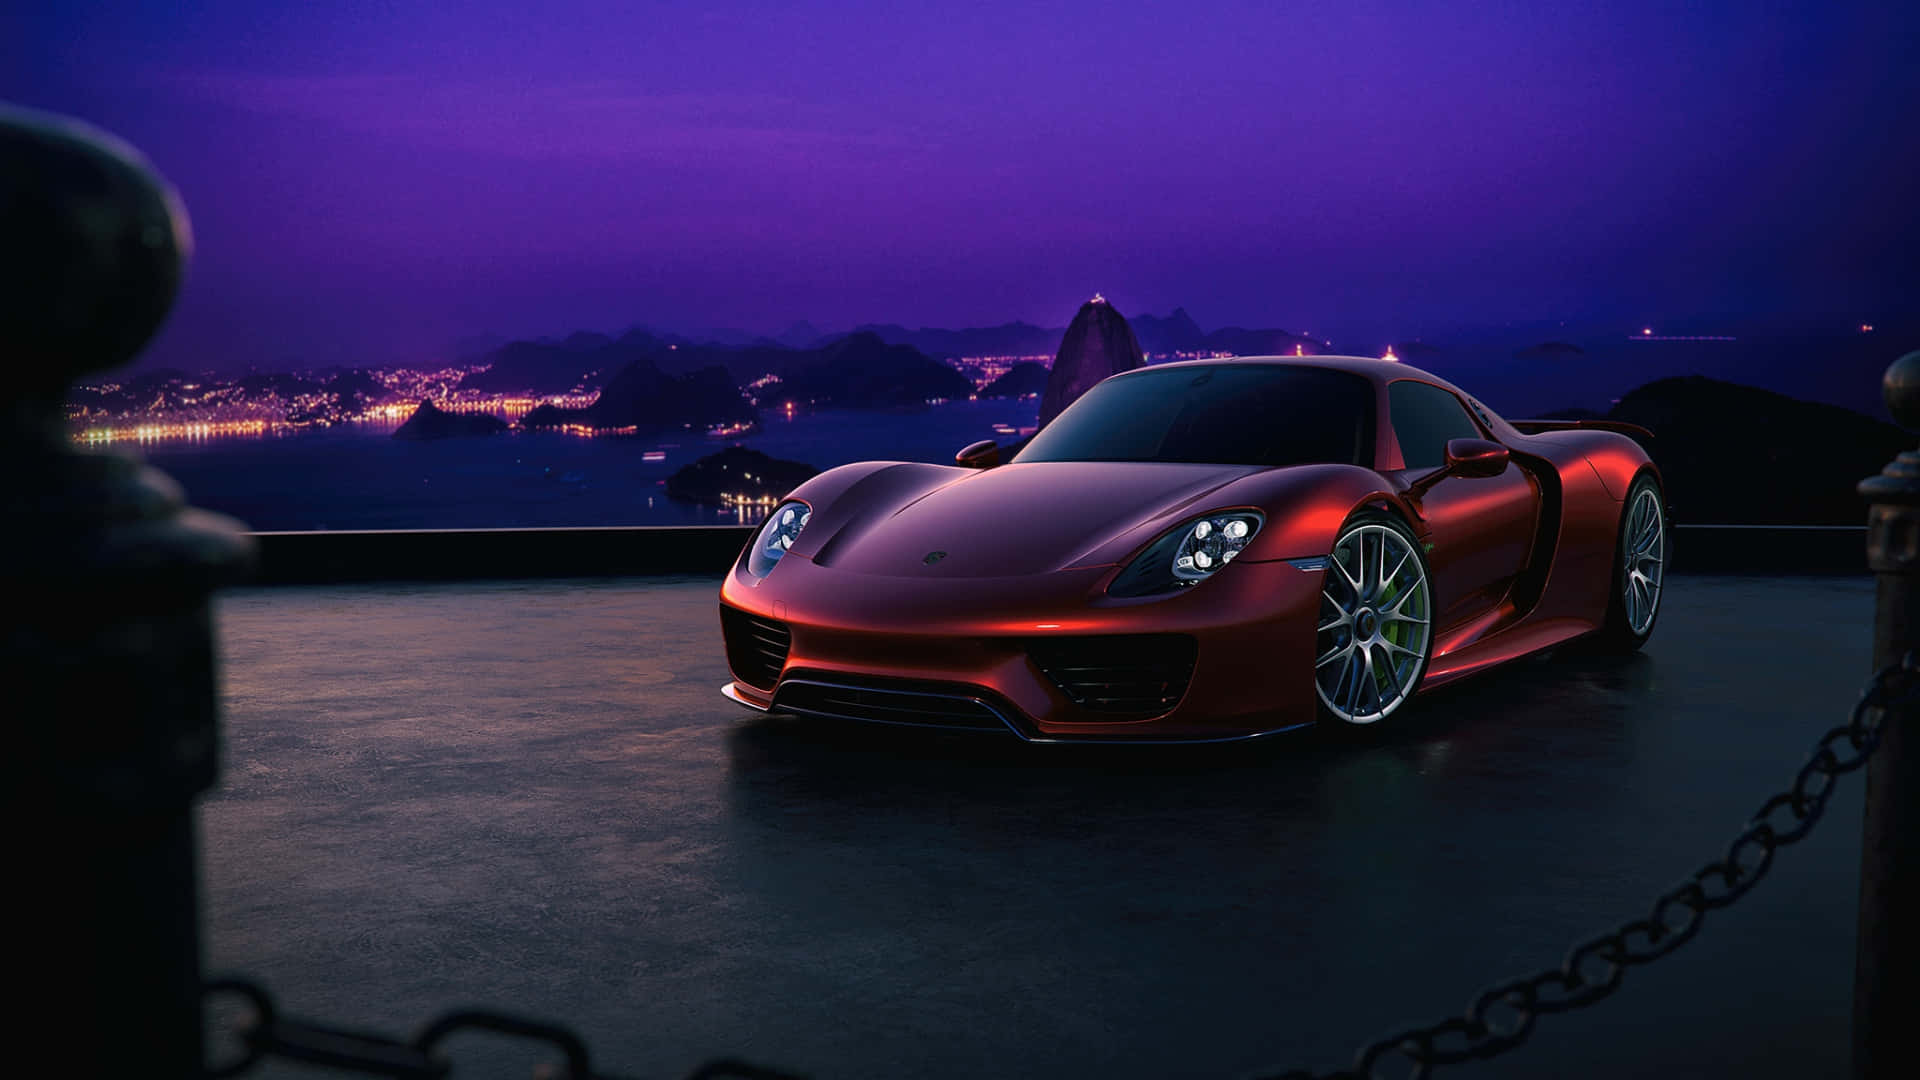 Sleek Porsche Racing Through Picturesque Landscape